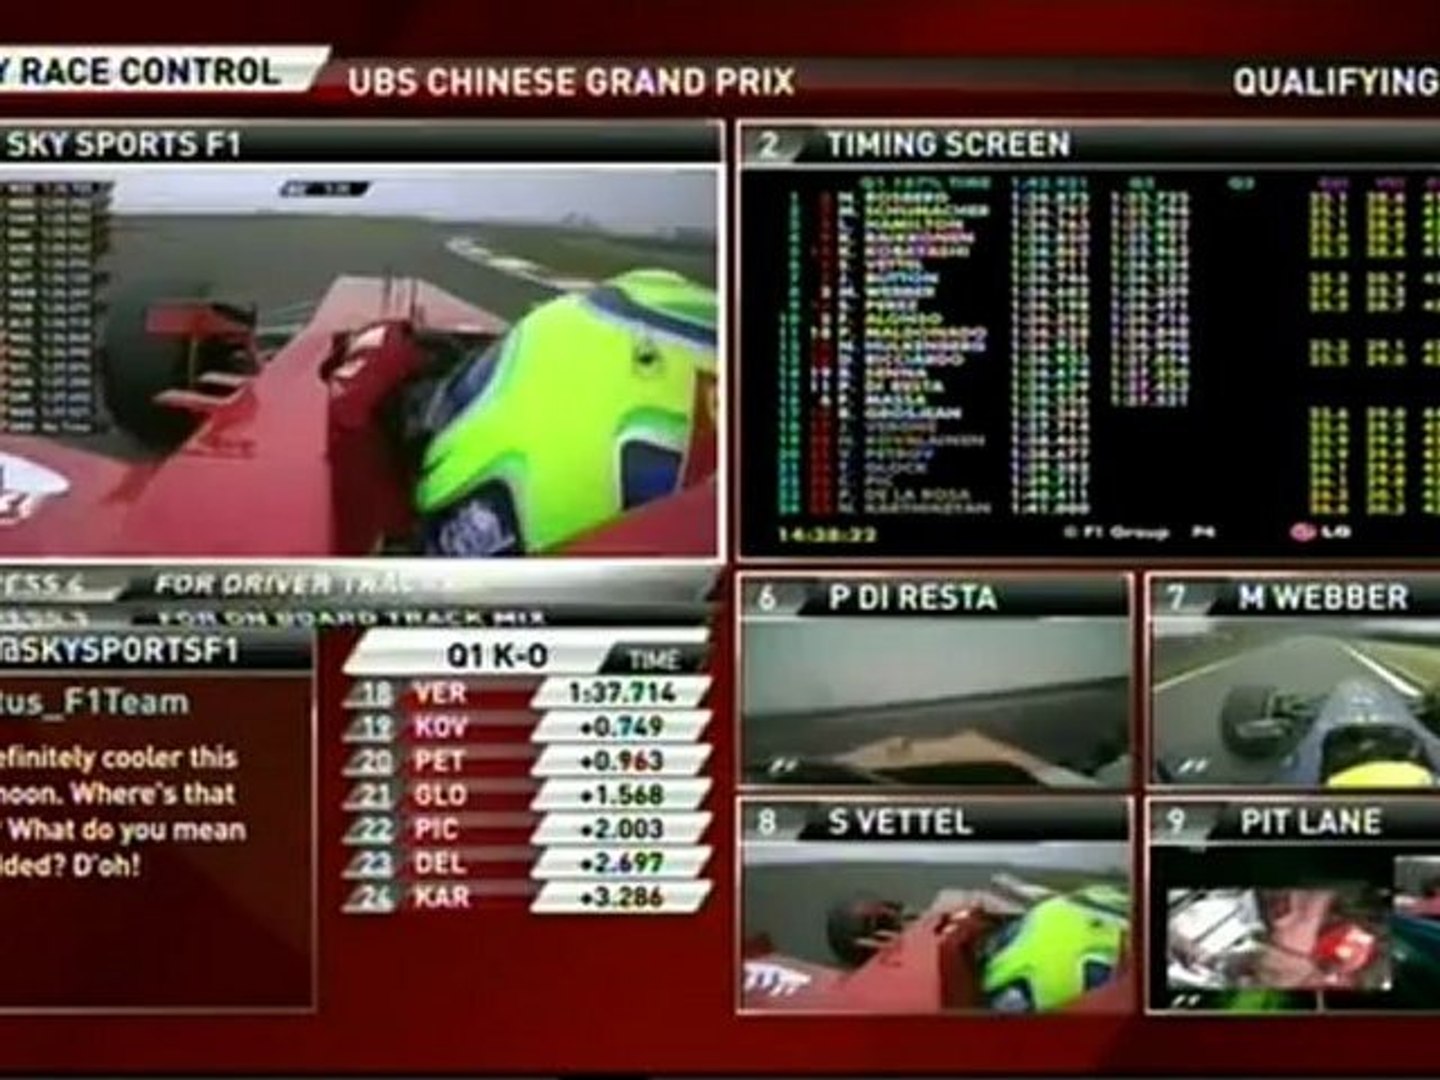 Shanghai Q2 (Sky race control demo)